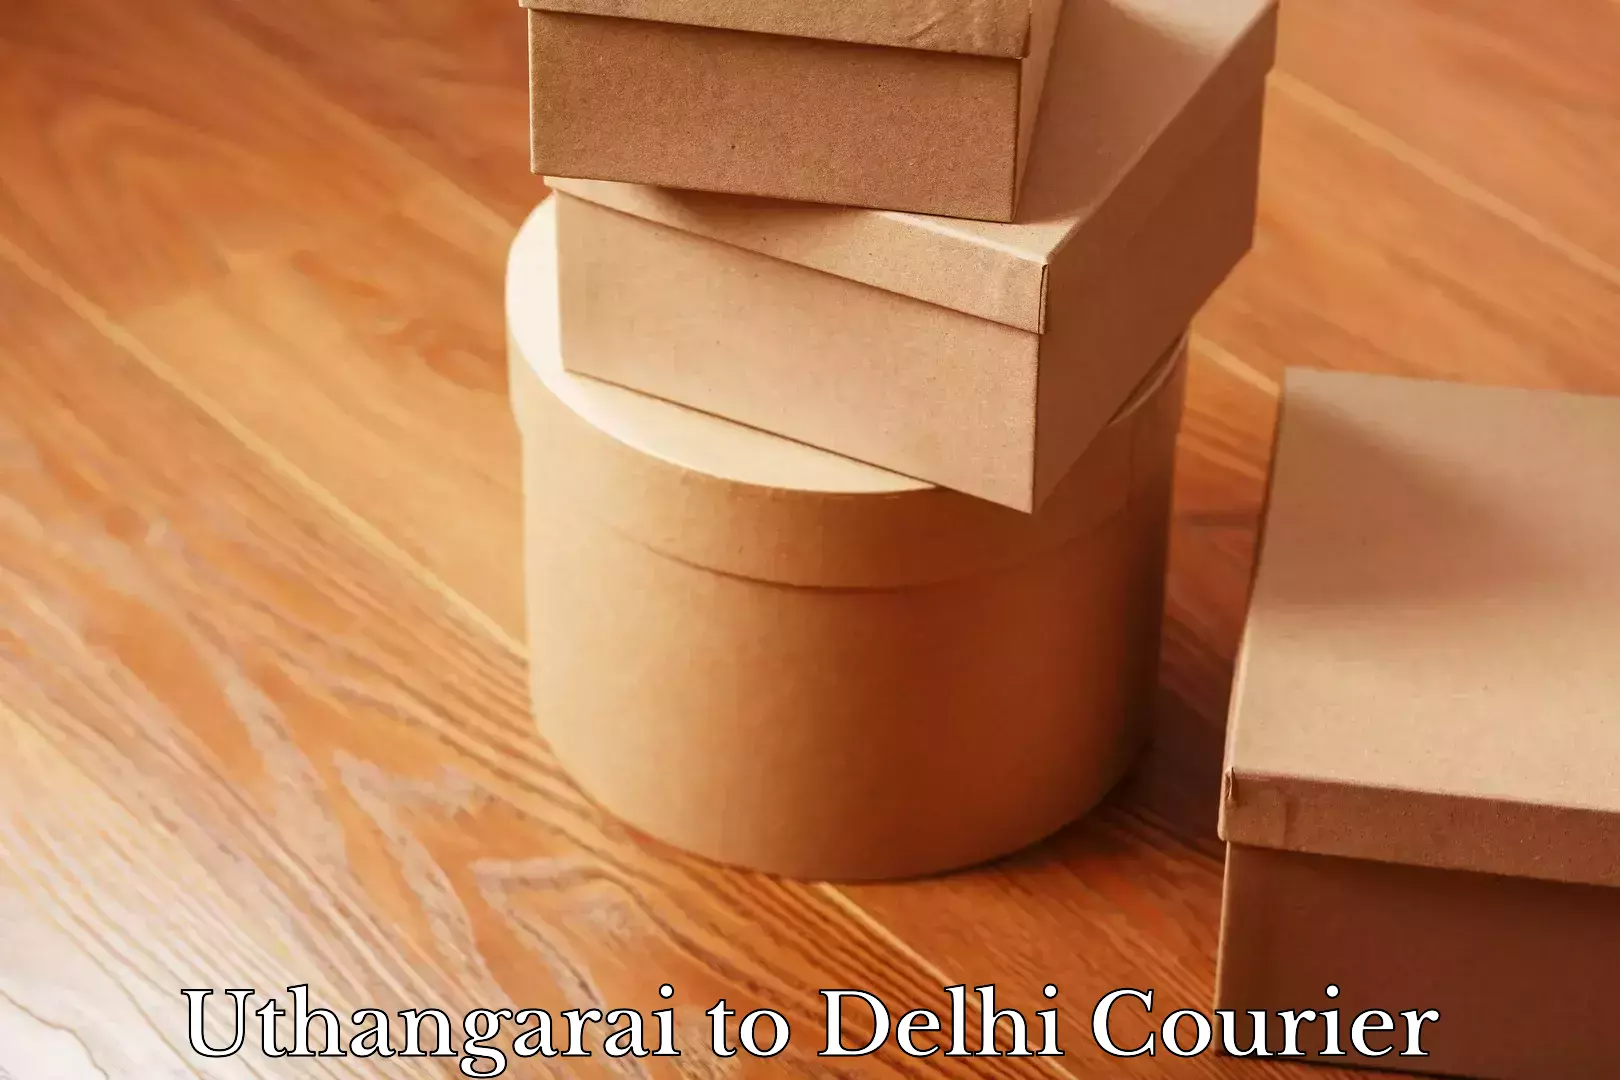 Sustainable courier practices Uthangarai to Delhi